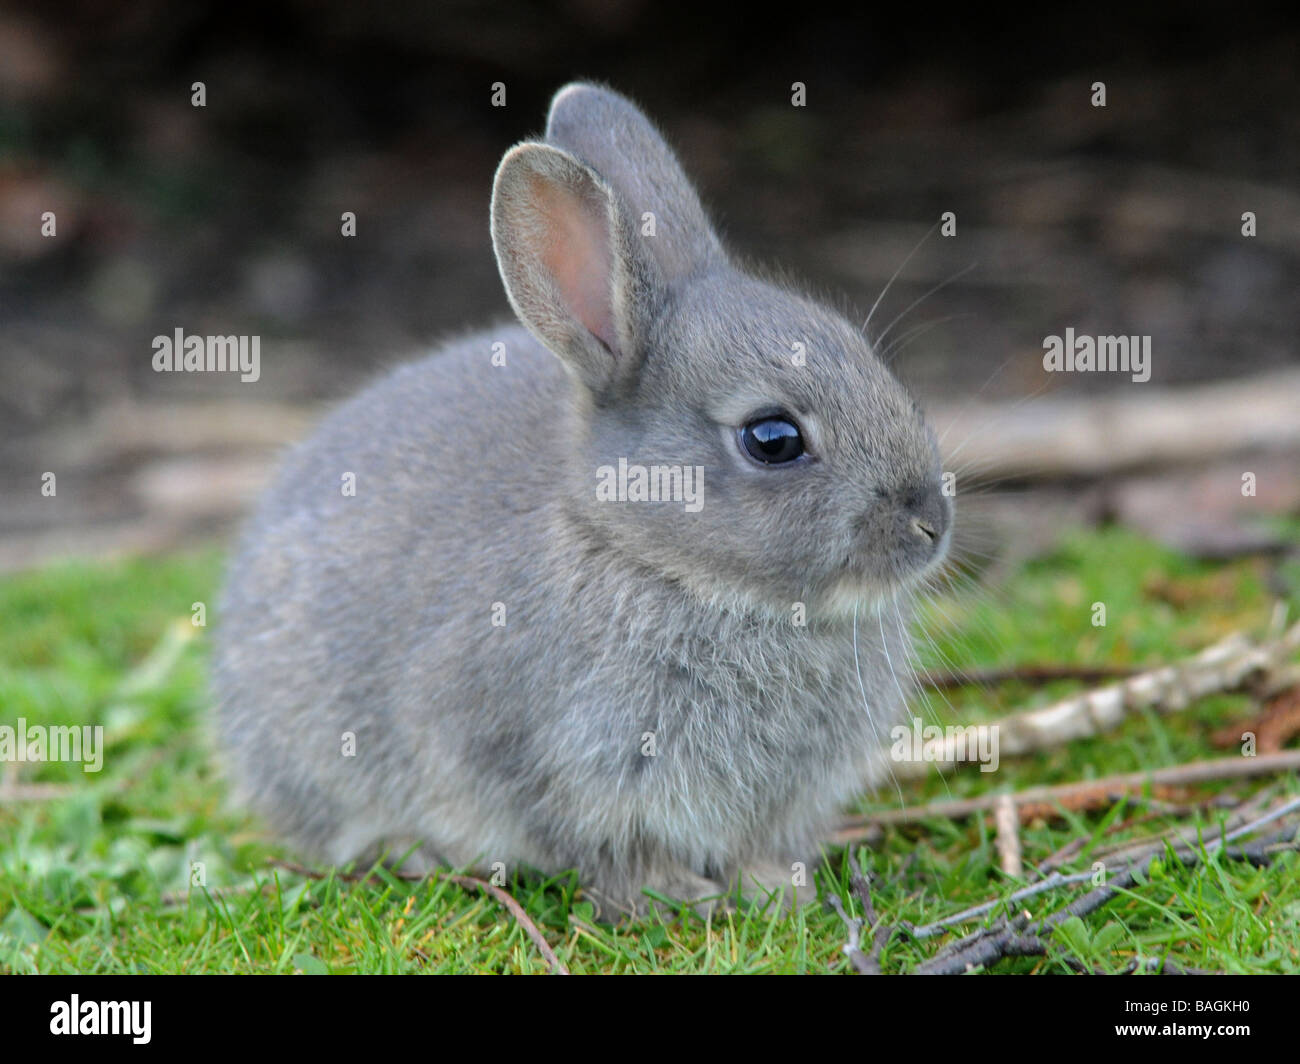 A small wild grey baby rabbit. Stock Photo